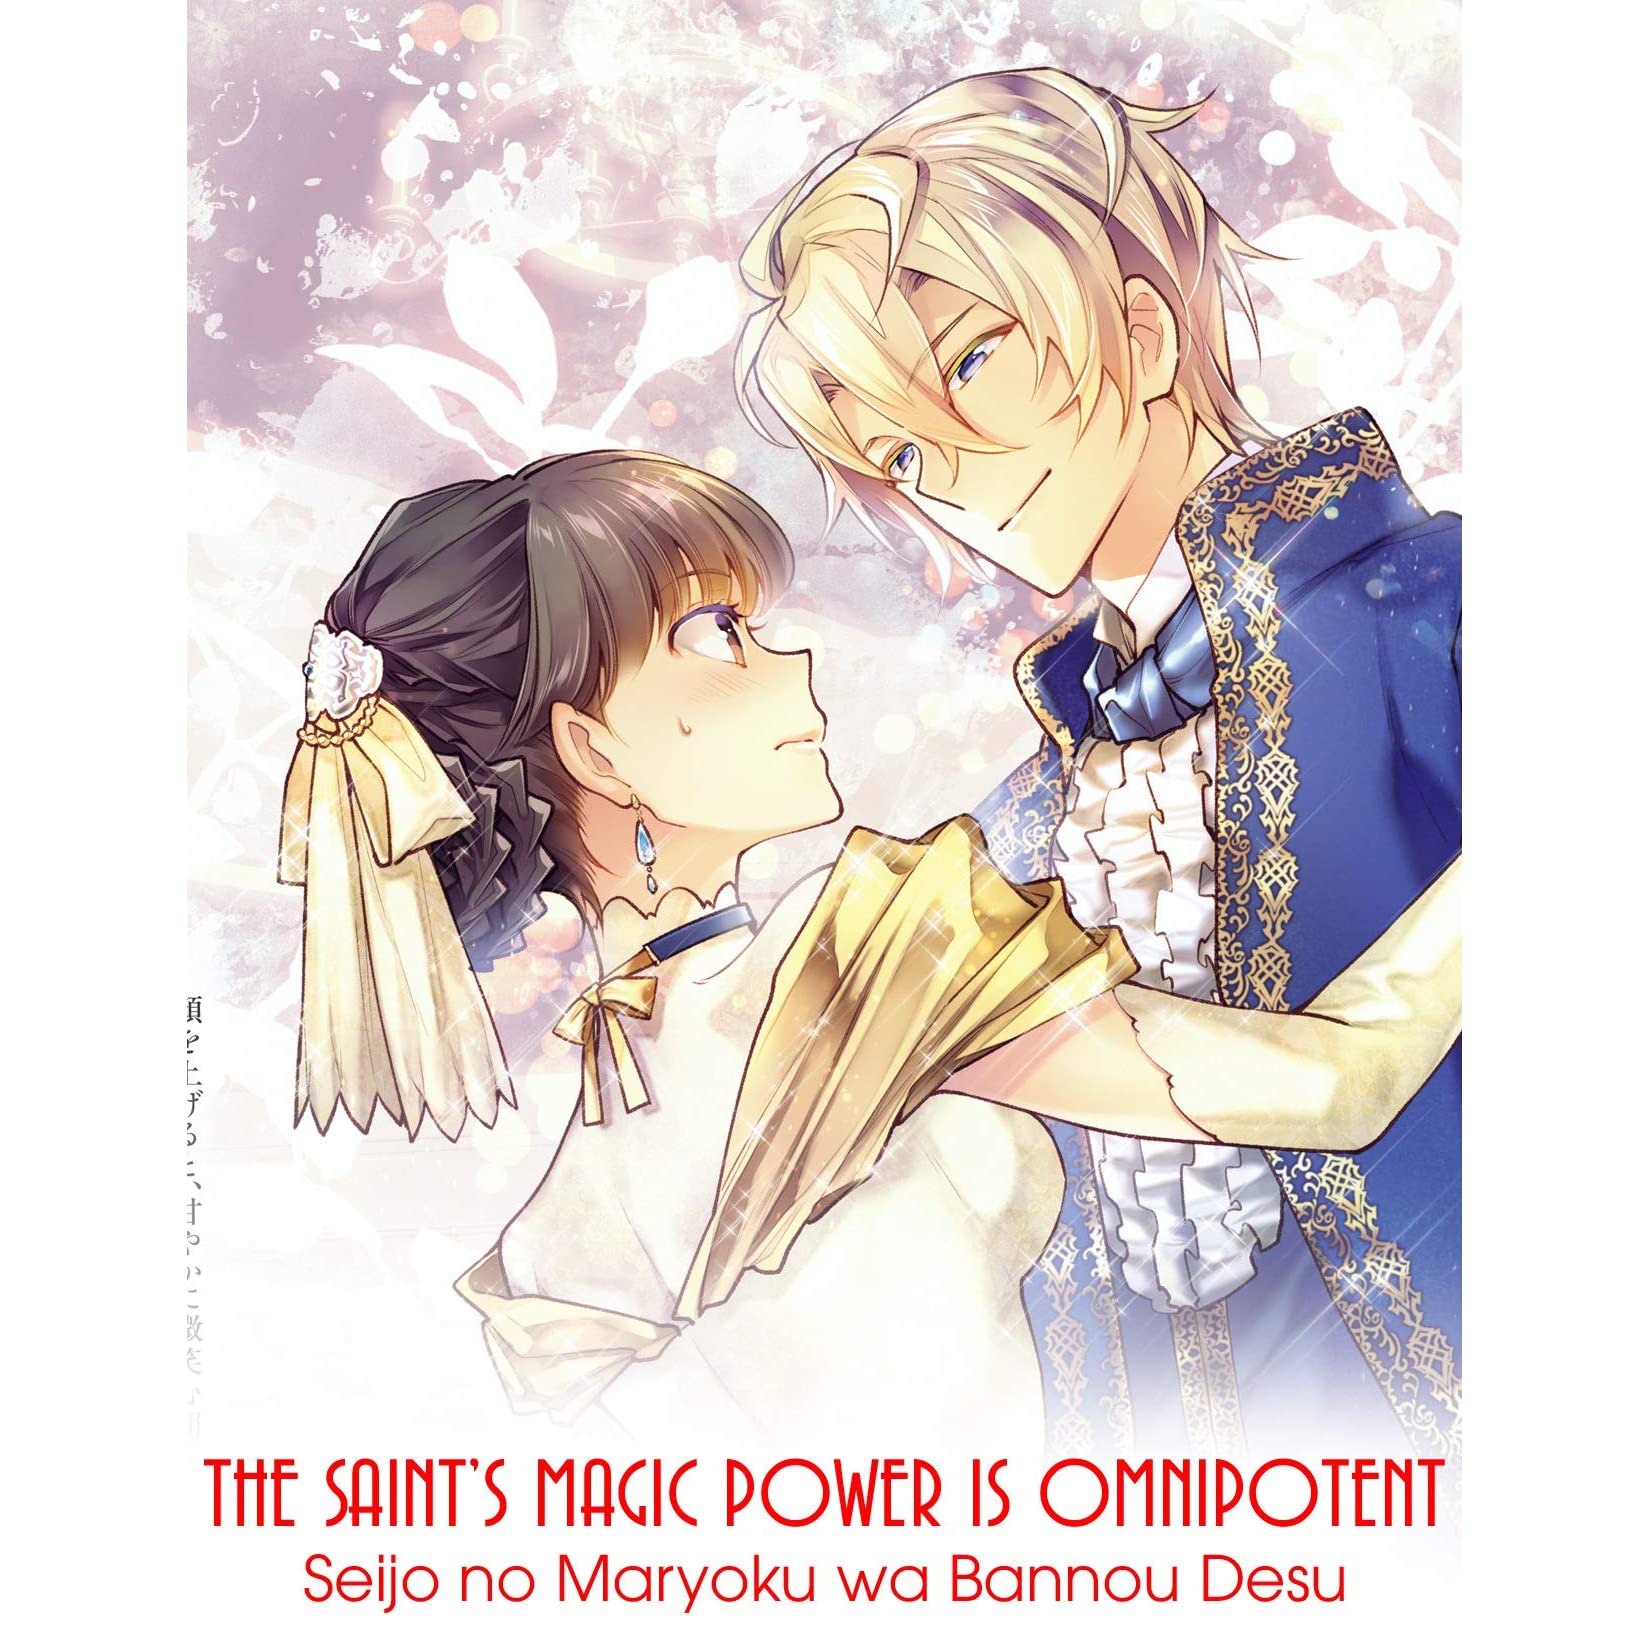 The Saint's Magic Power: The Saint's Magic Power is Omnipotent Manga and Light Novel. Seijo no Maryoku wa Bannou desu Manga Vol. Complete. FULL COLLECTION FANS